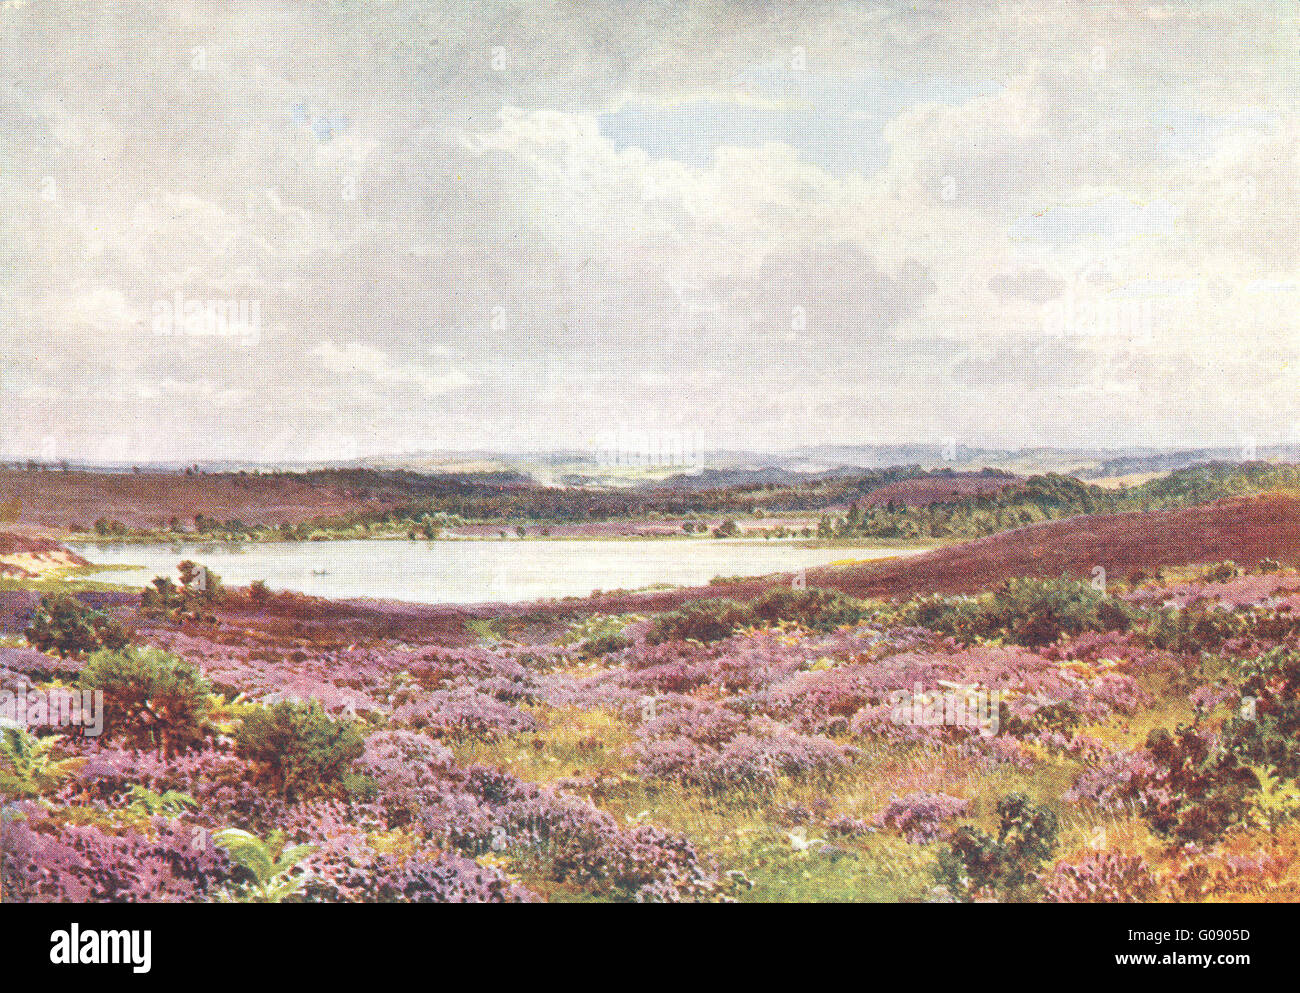 SURREY: Great Pond, Frensham, grabado antiguo 1912 Foto de stock